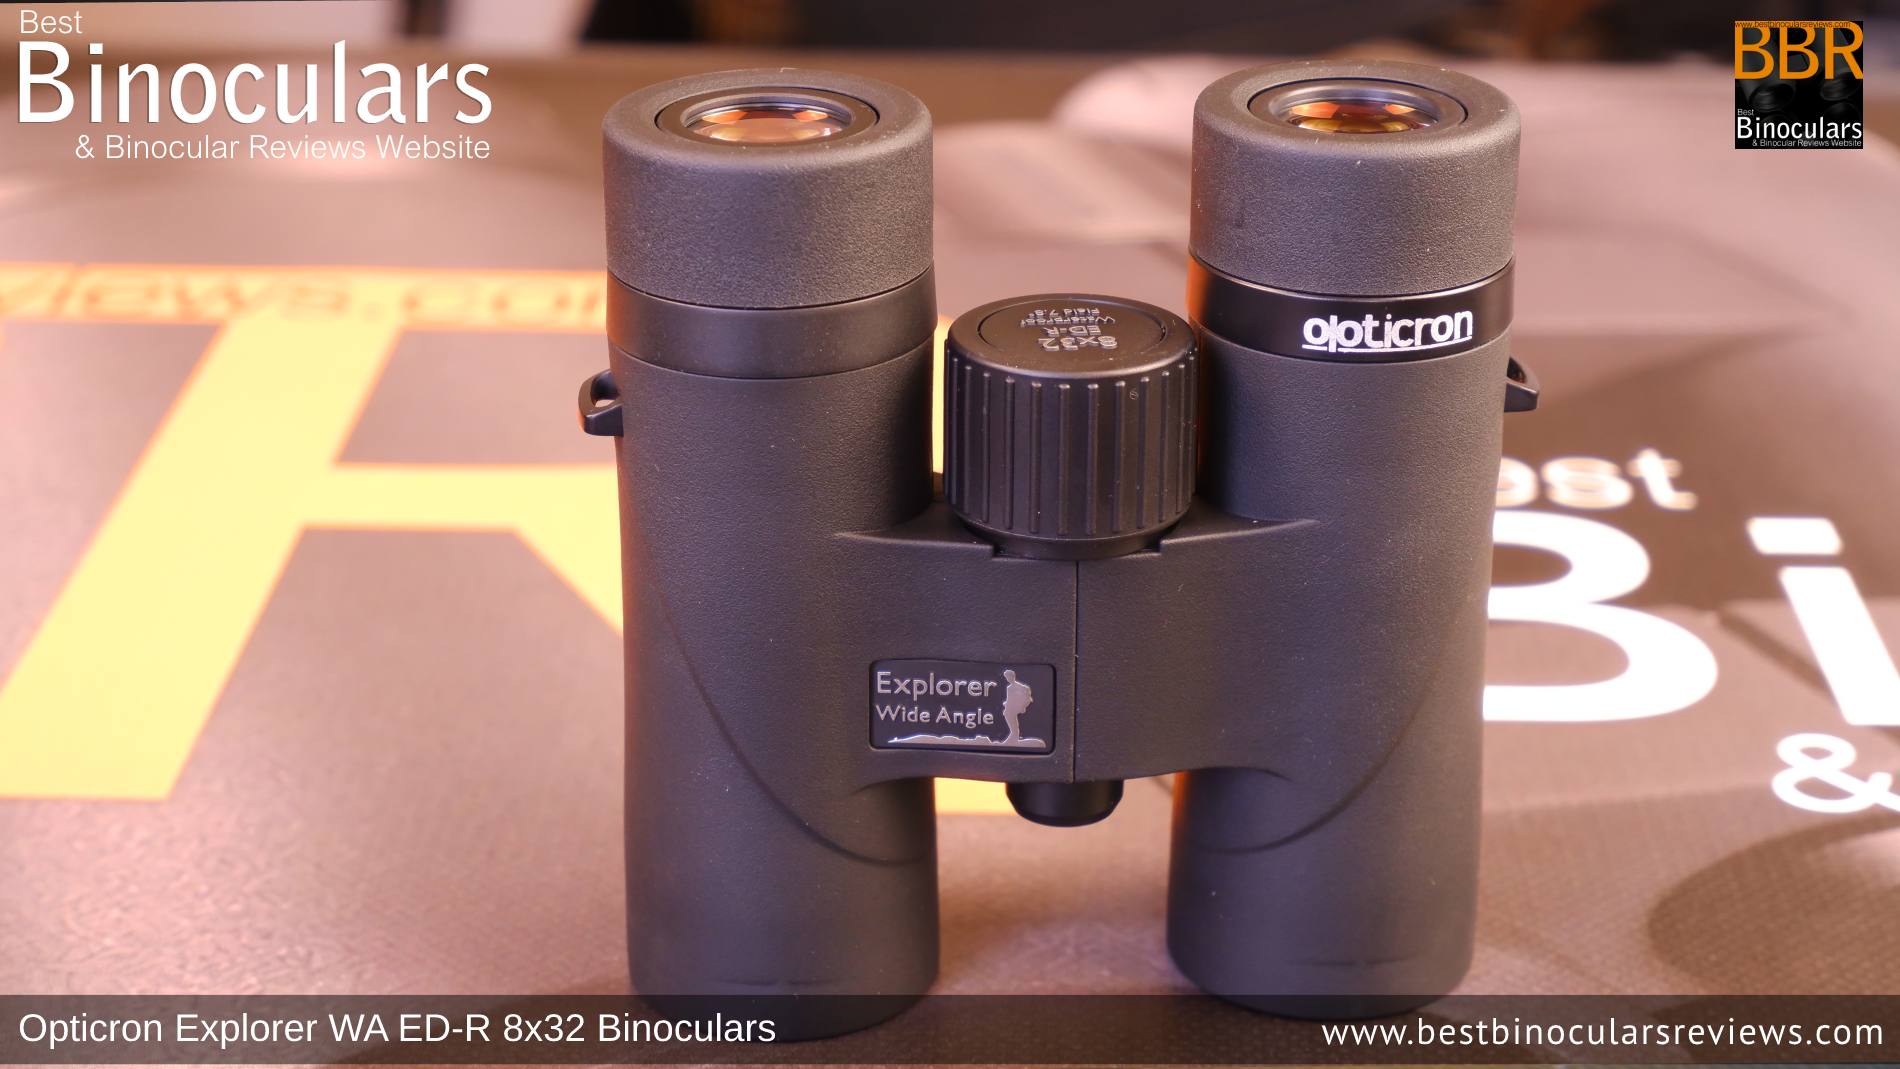 Opticron Explorer WA ED-R 8x32 Binoculars Review